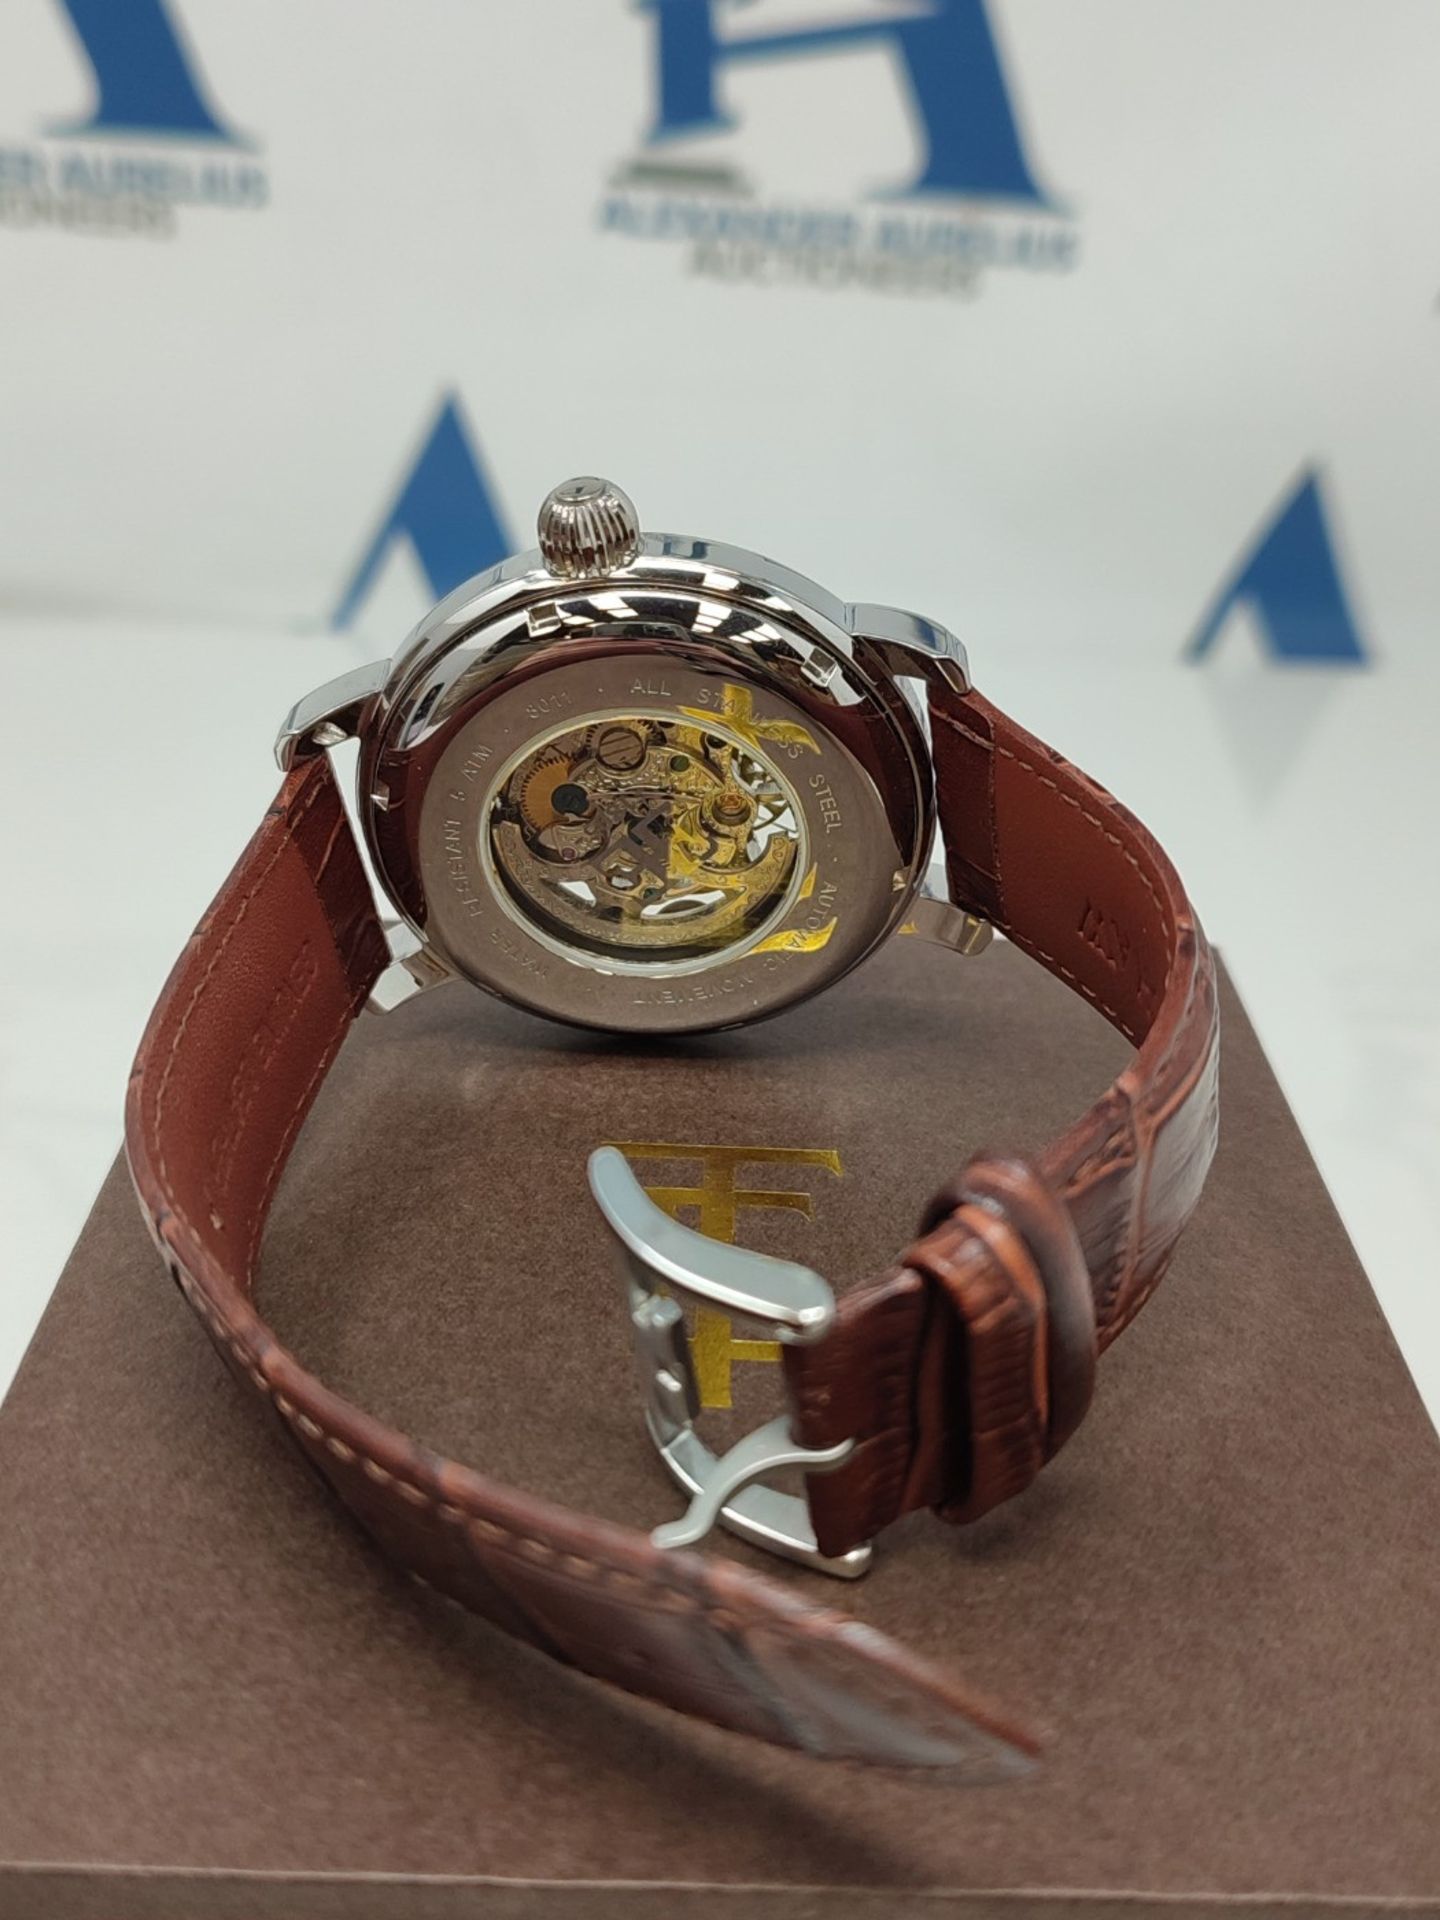 RRP £114.00 Thomas Earnshaw Men's Longcase Analog Automatic Watch - Image 3 of 3